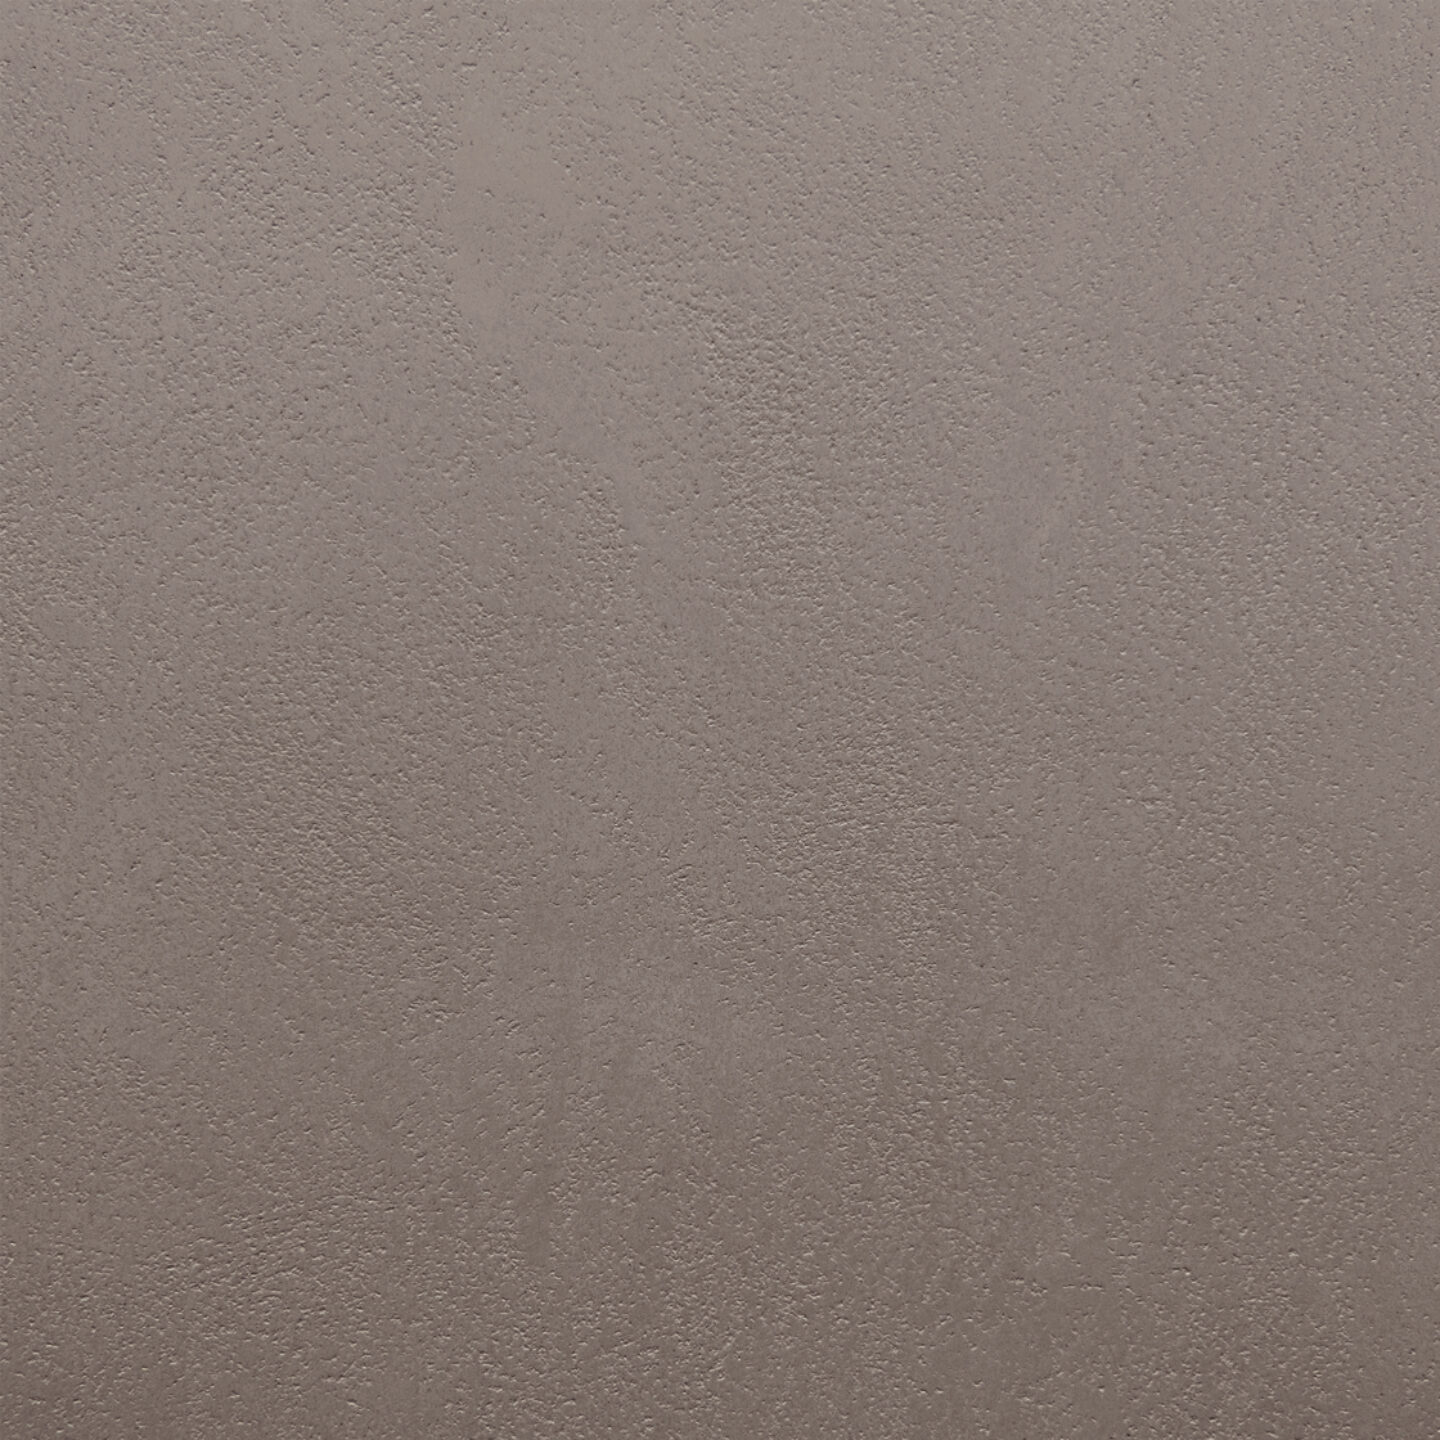 Close up of Armourcoat leatherstone exterior polished plaster finish - 35